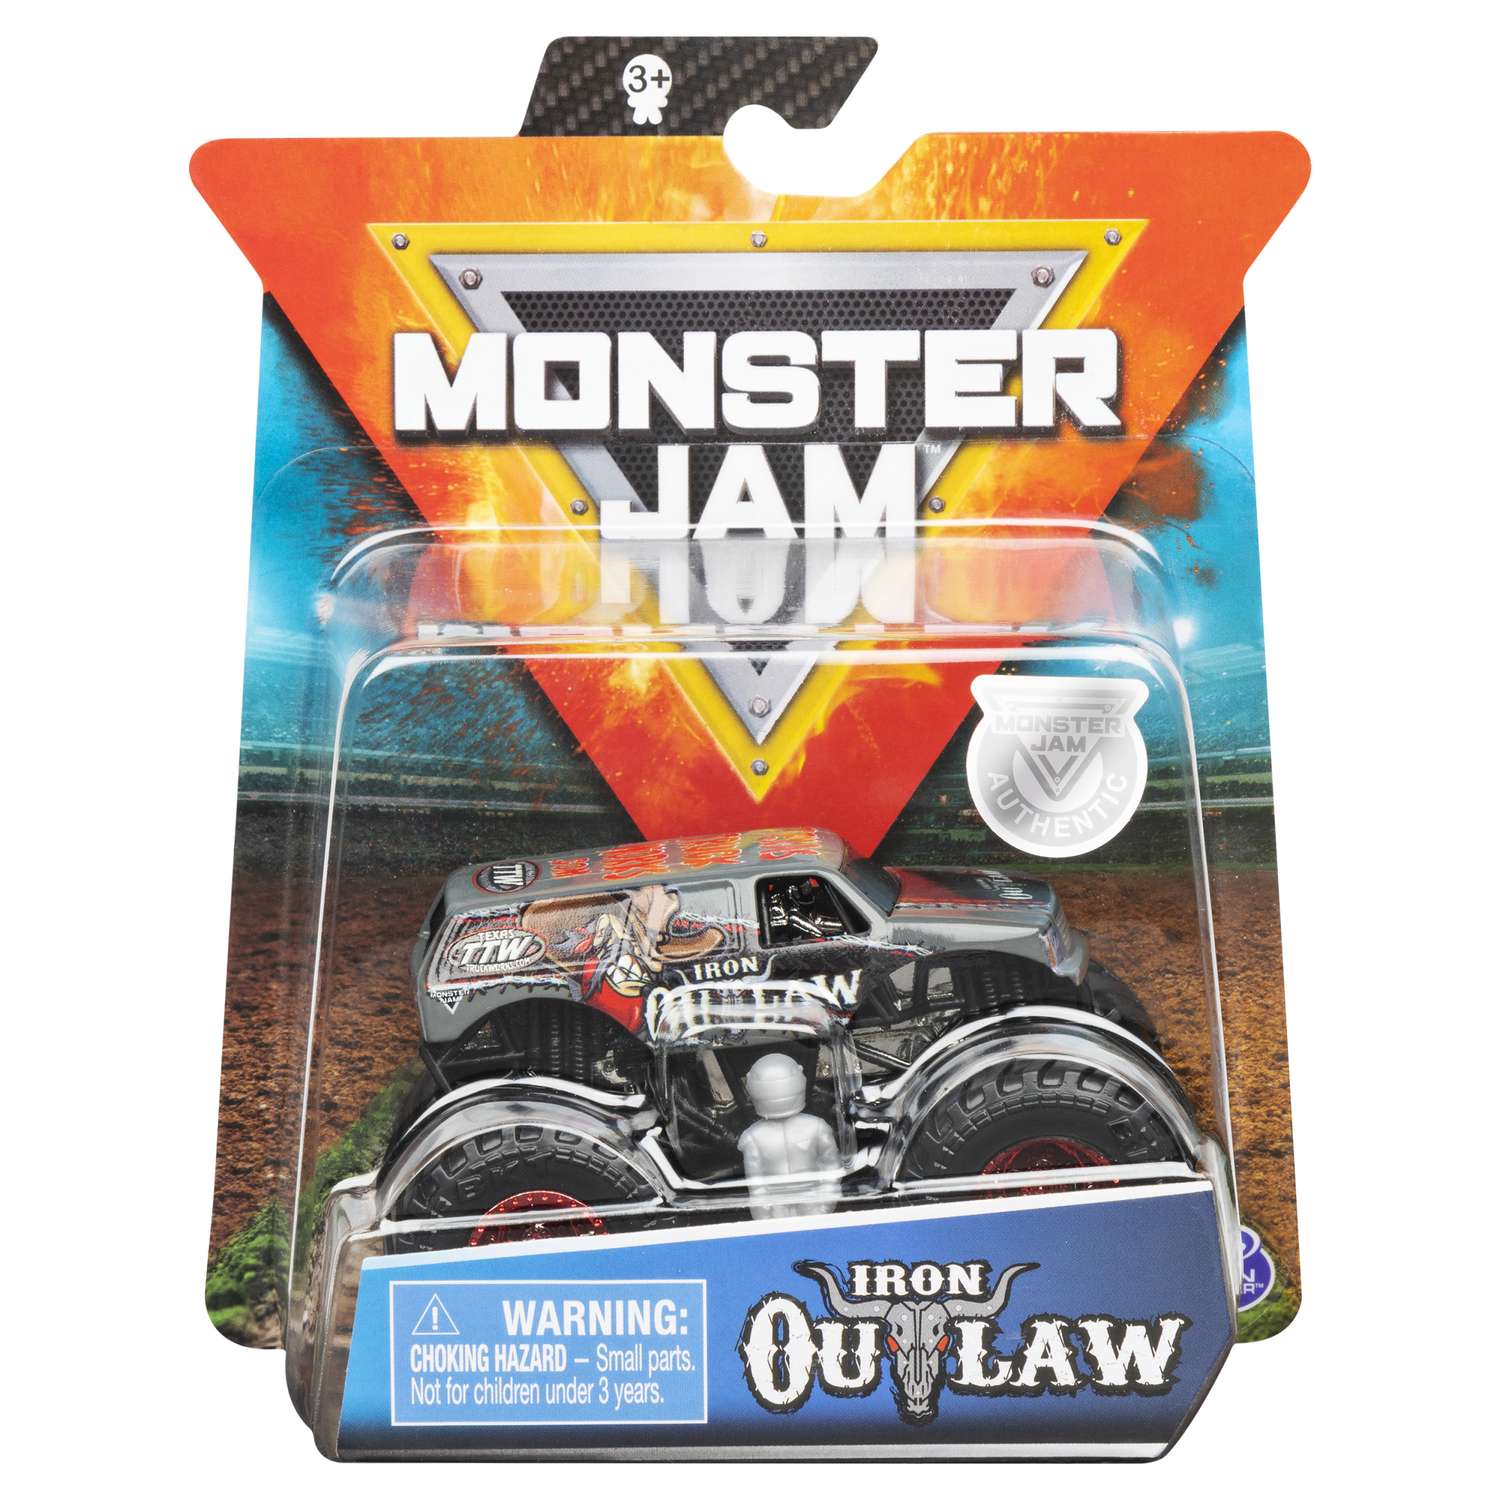 Машинка Monster Jam 1:64 Iron Outlaw 6044941/20116898 6044941 - фото 2